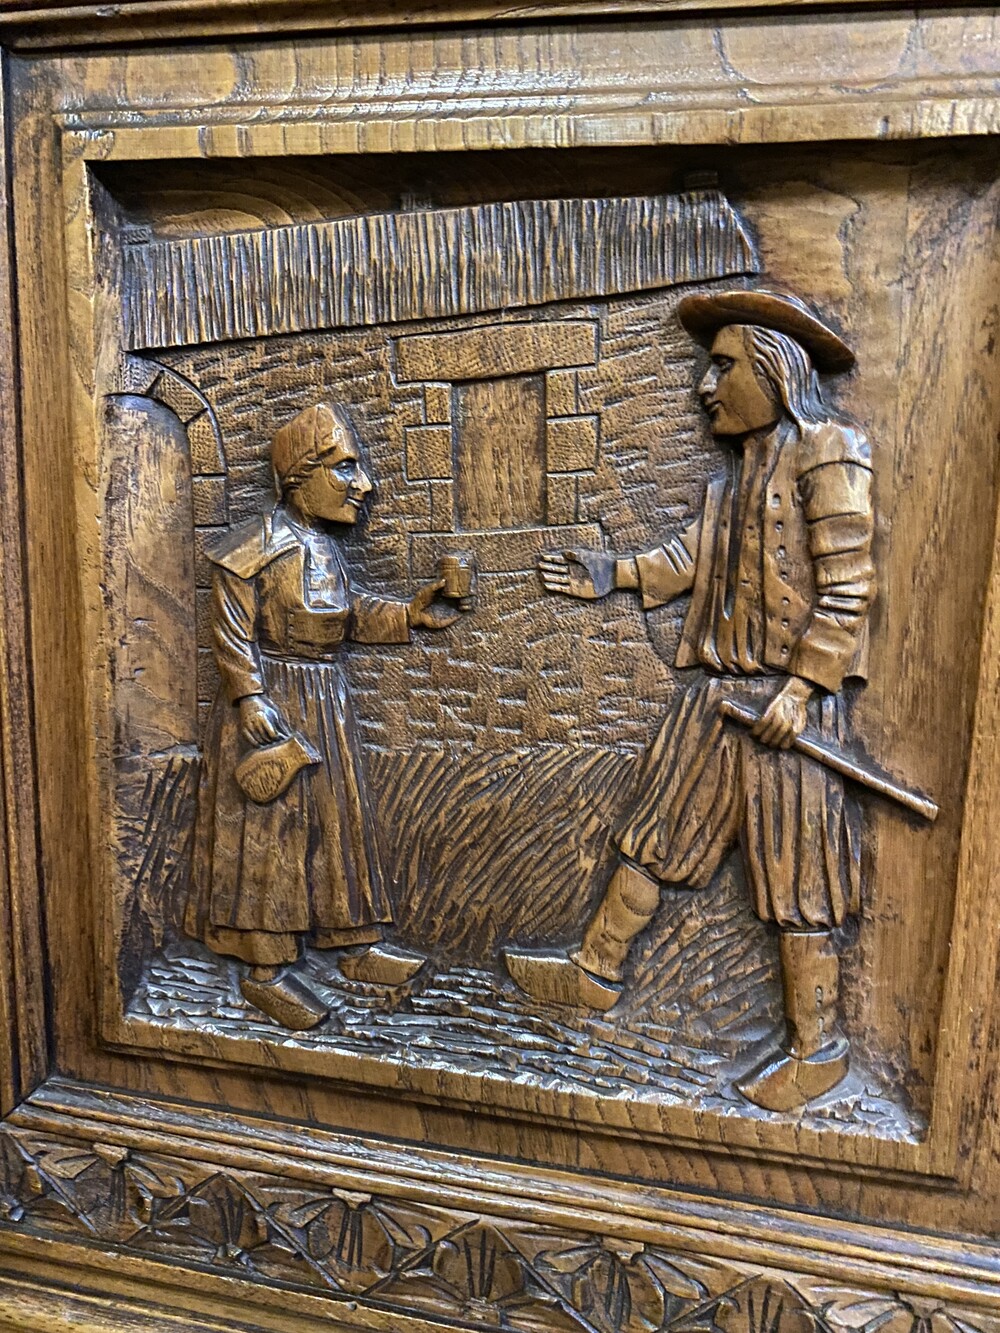 Nice carved Breton cabinet